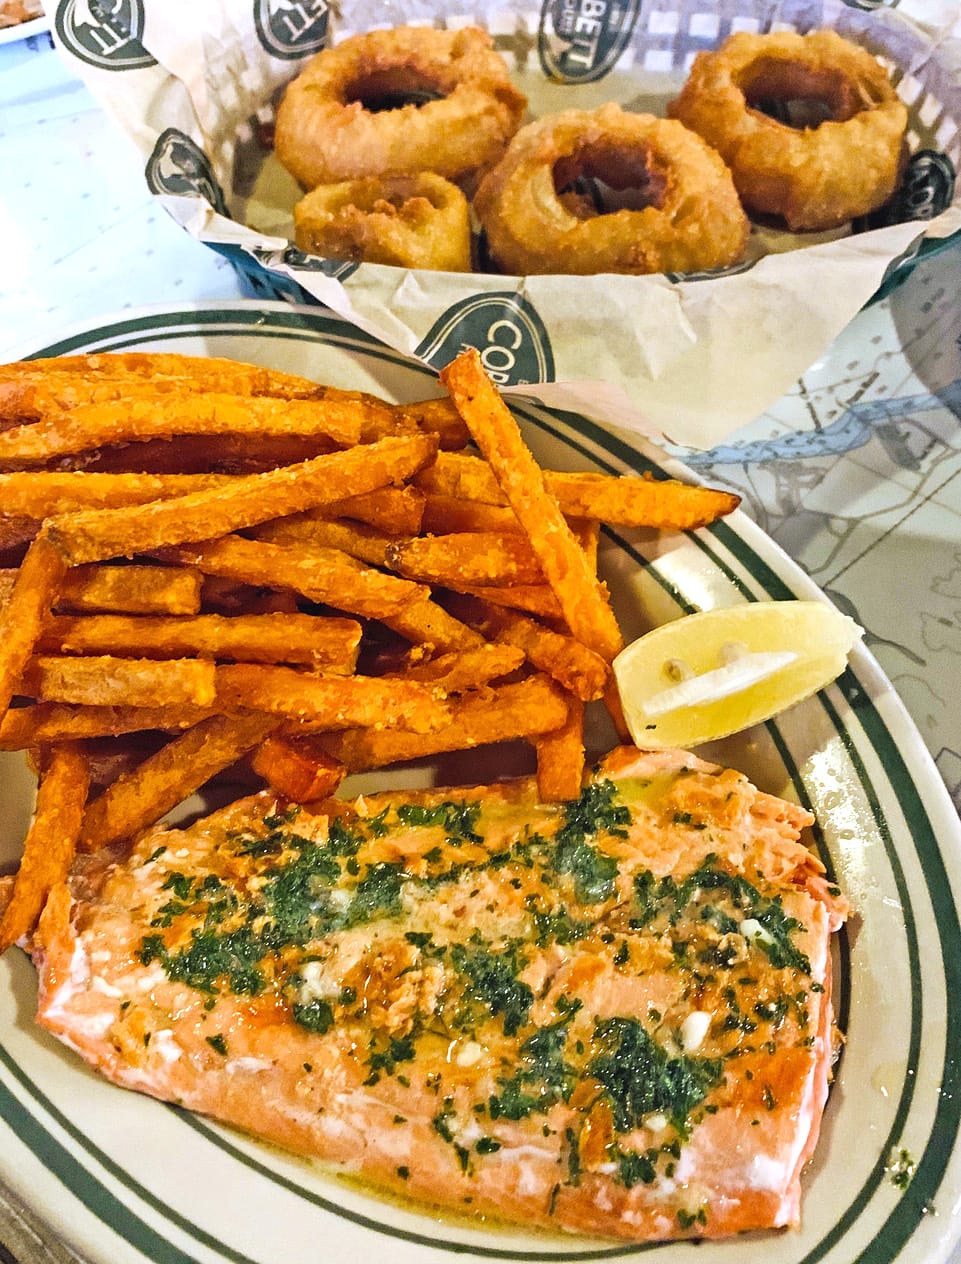 Grilled sockeye salmon, sweet potato fries and onion rings at Corbett Fish House.